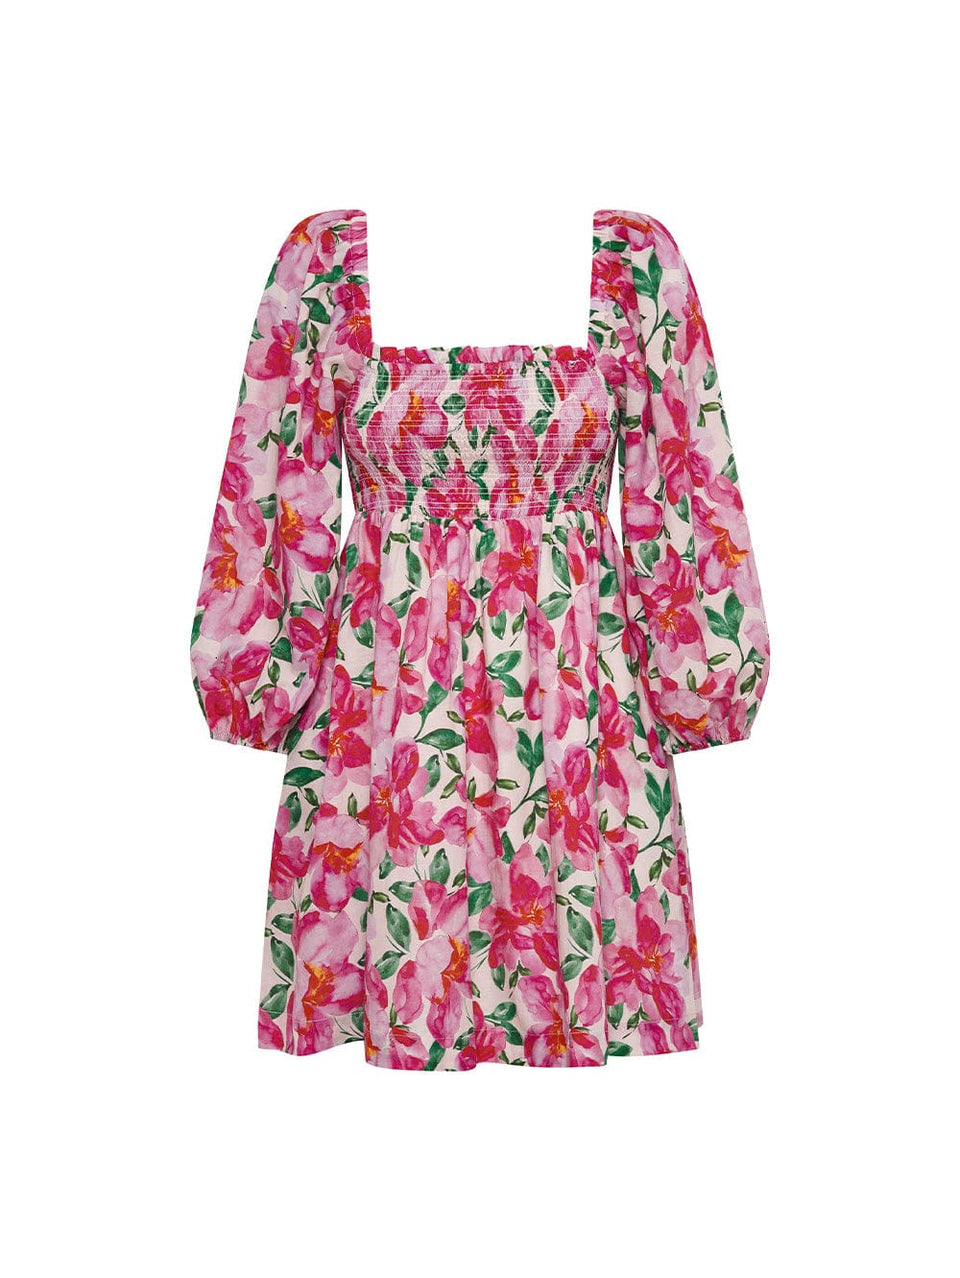 KIVARI Antonia Shirred Mini Dress | Pink and Green Floral Mini Dress